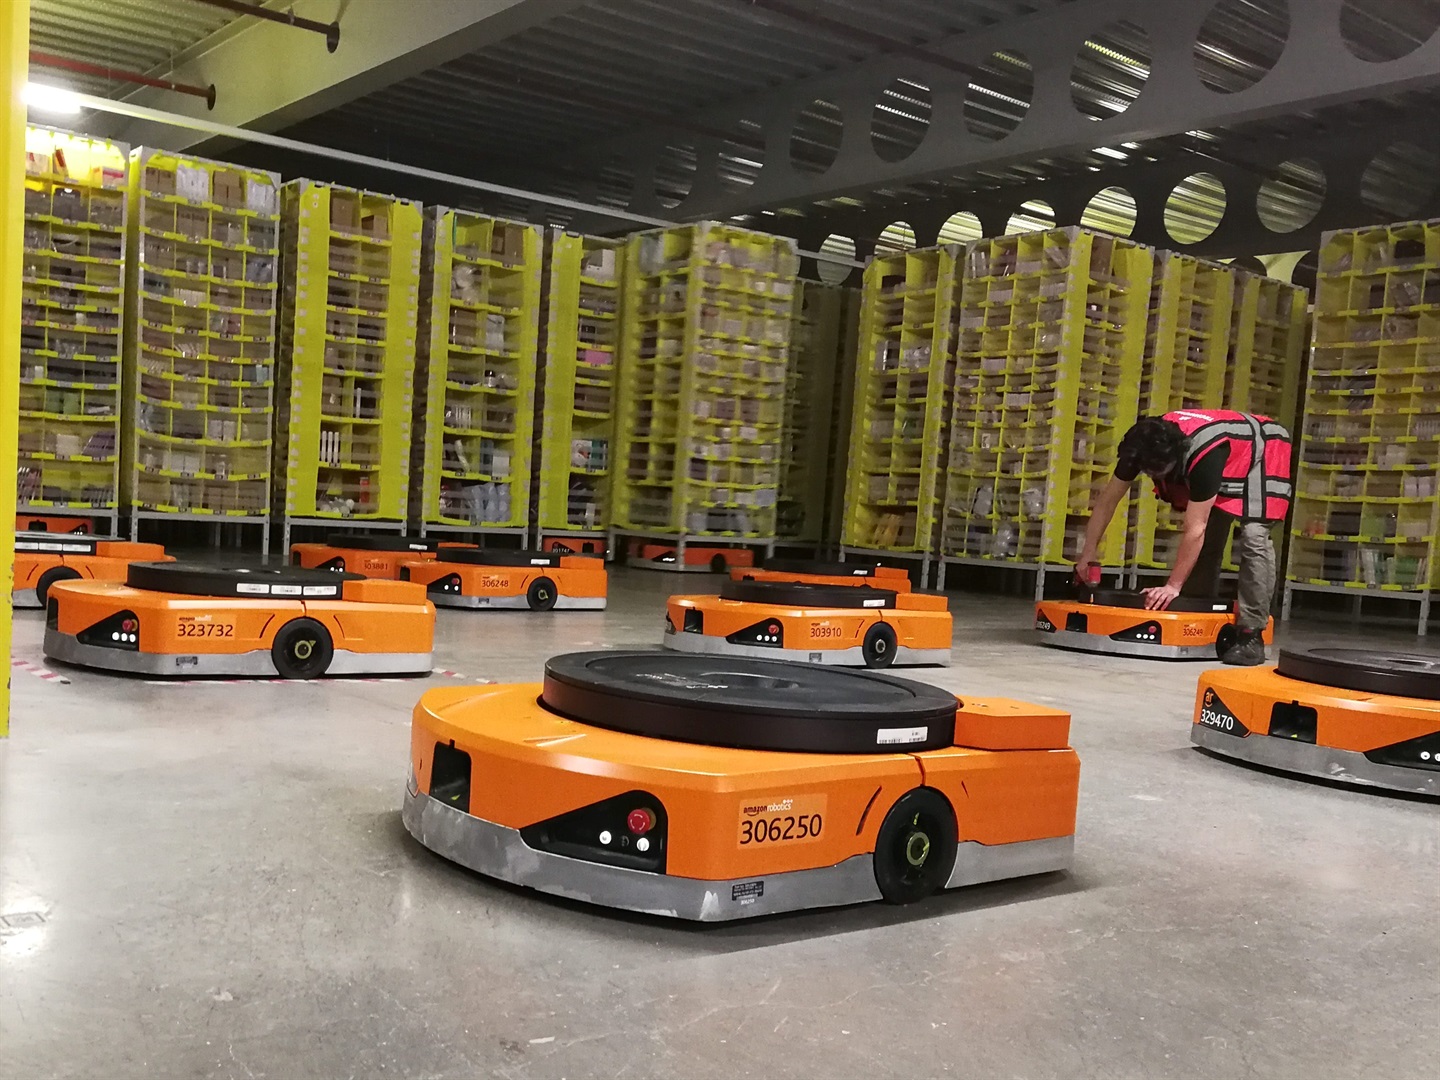 Robots in an Amazon warehouse.